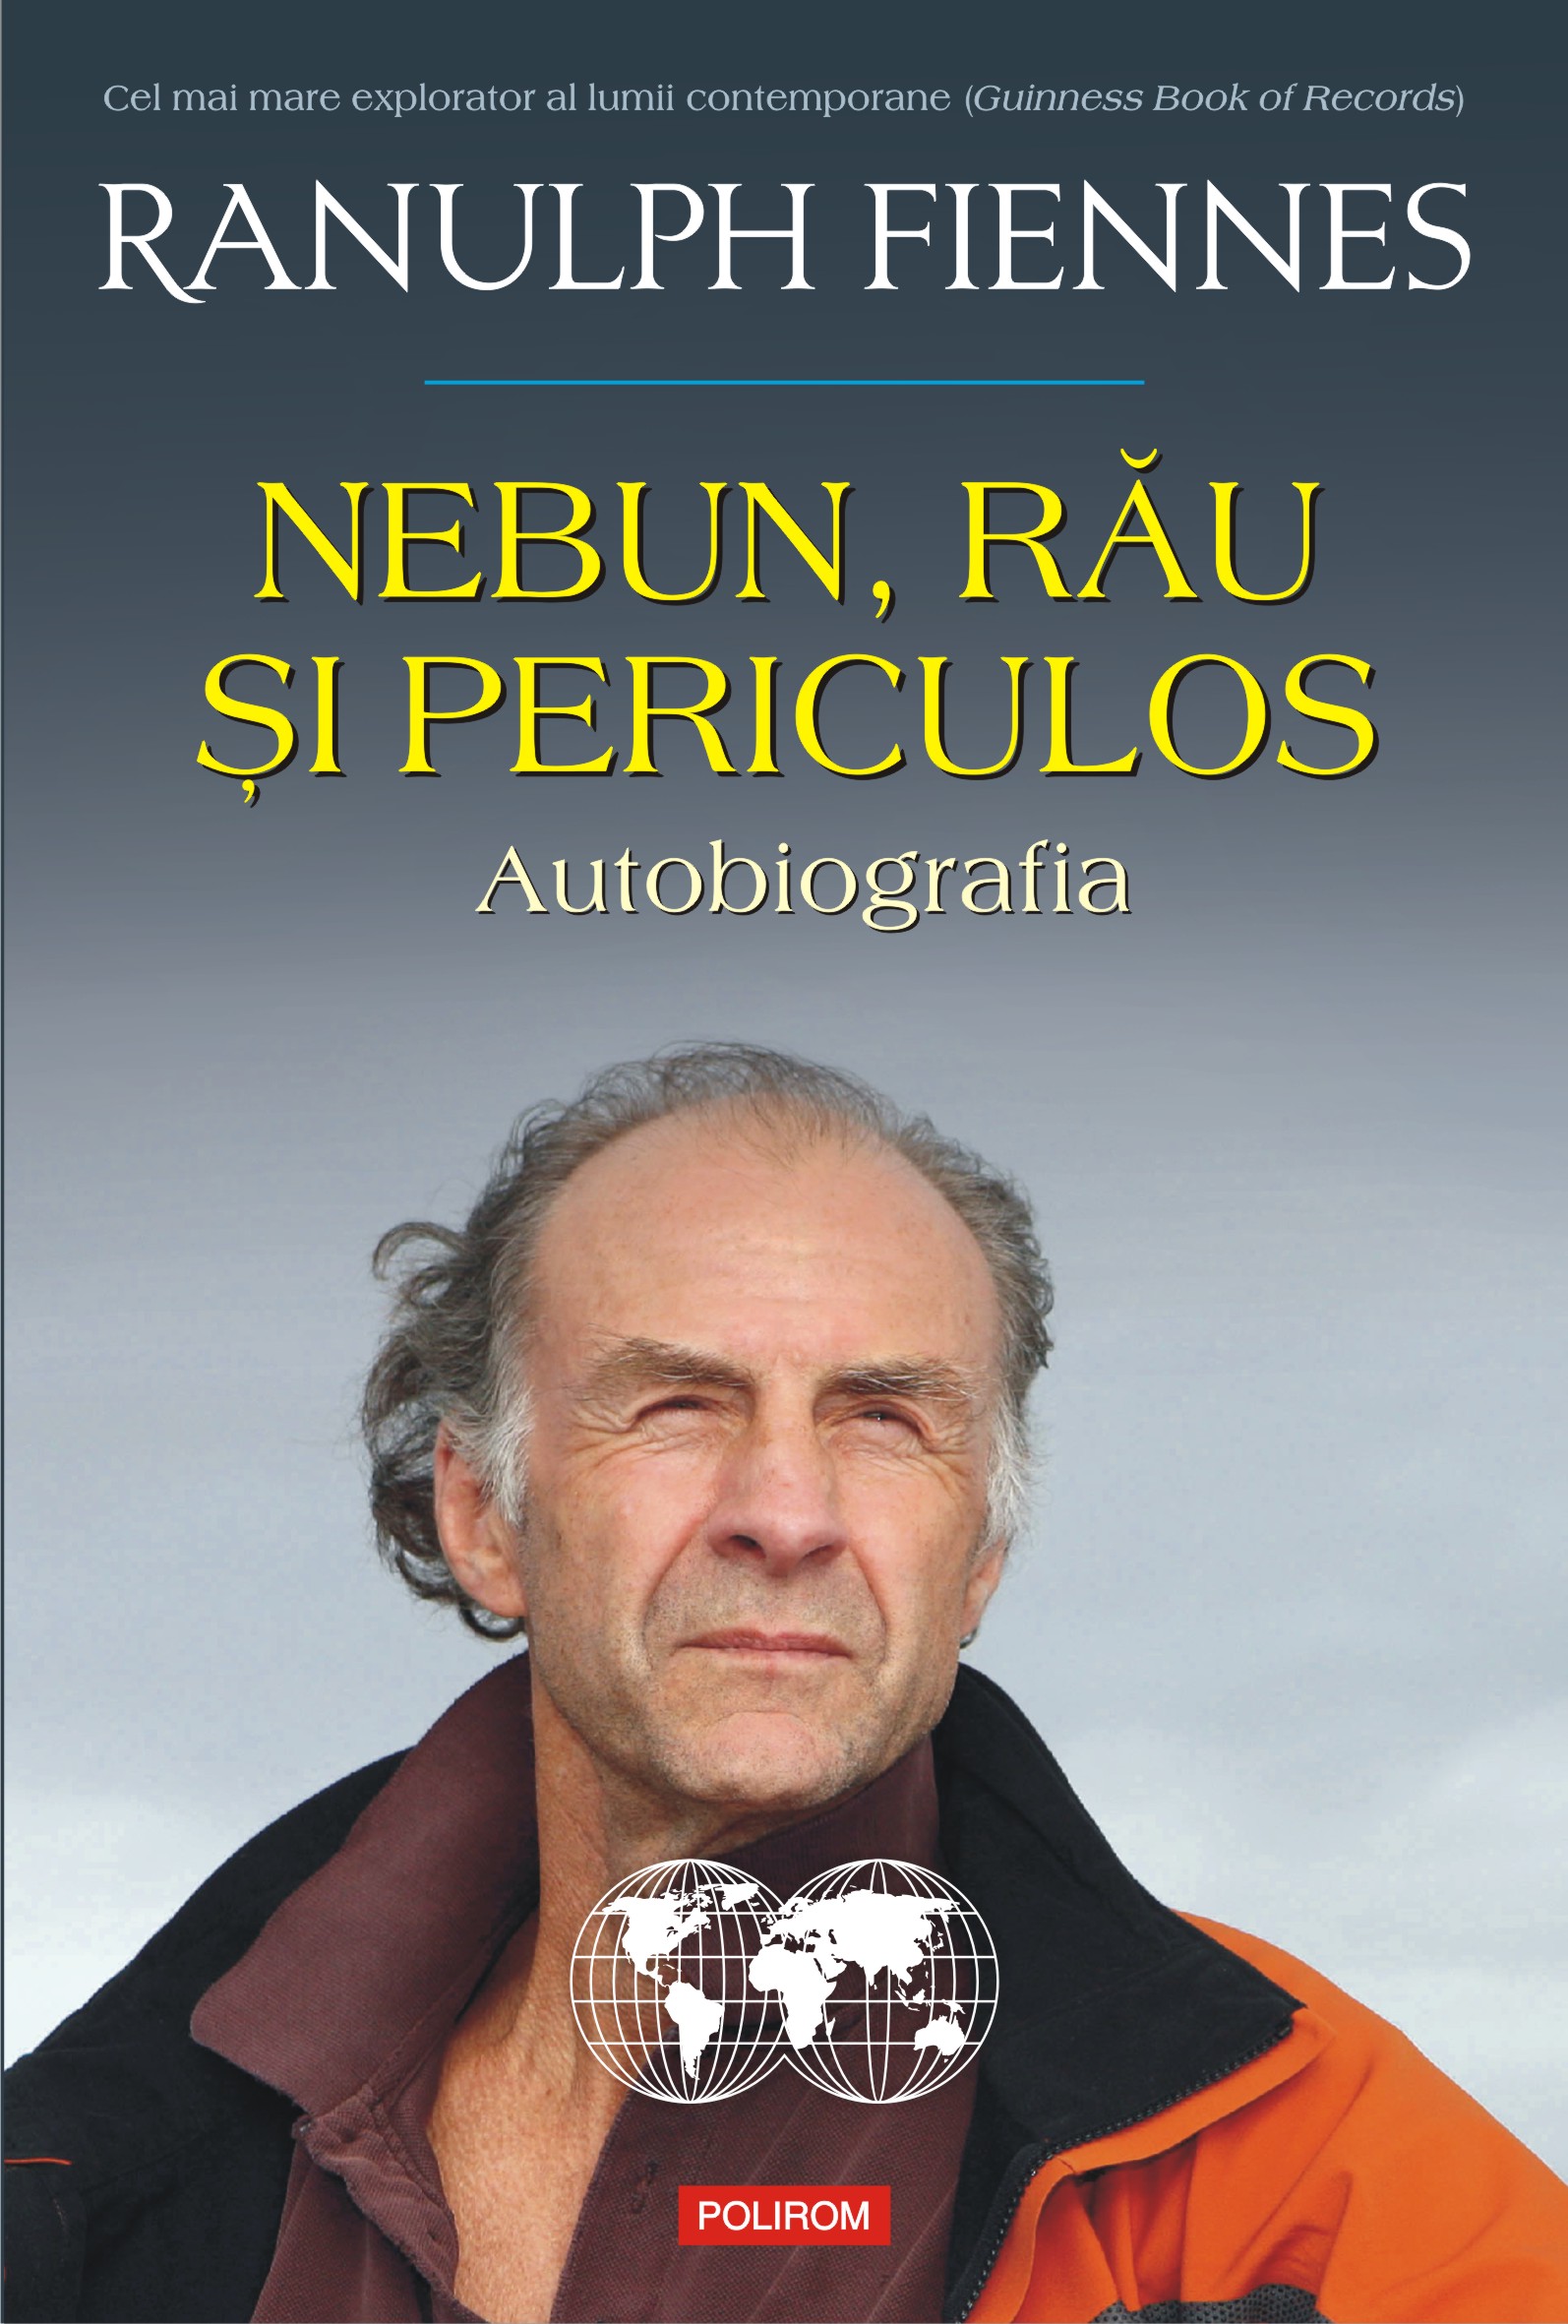 eBook Nebun, rau si periculos. Autobiografia - Ranulph Fiennes